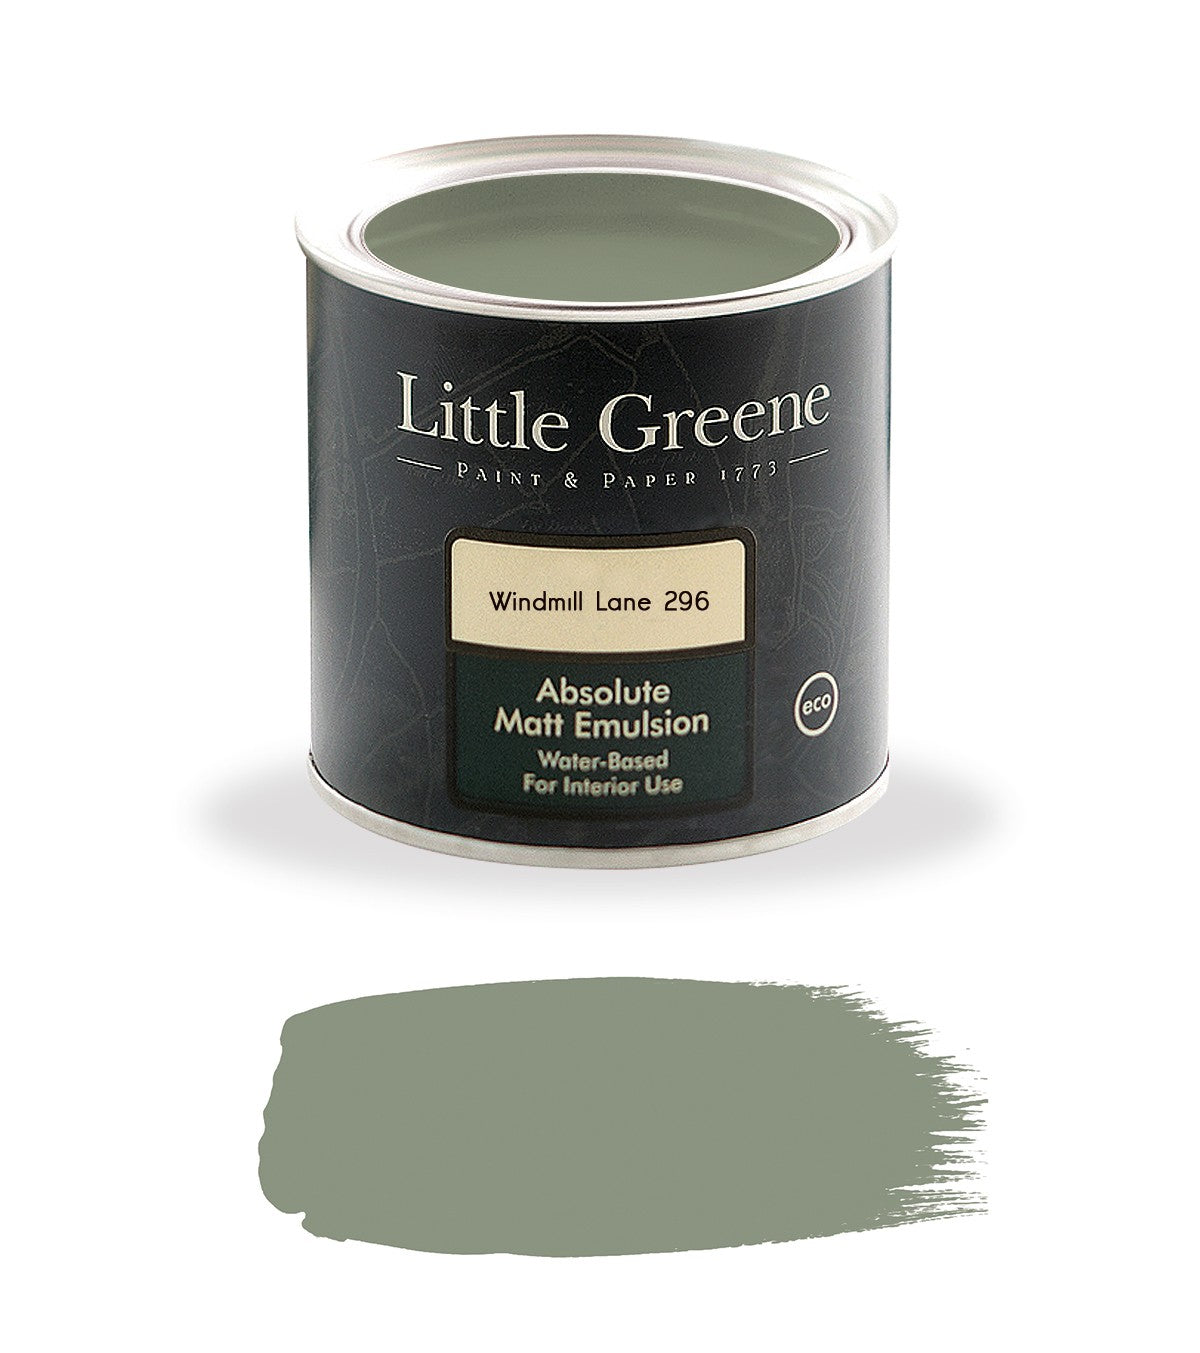 Little Greene paint - Windmill lane (296)